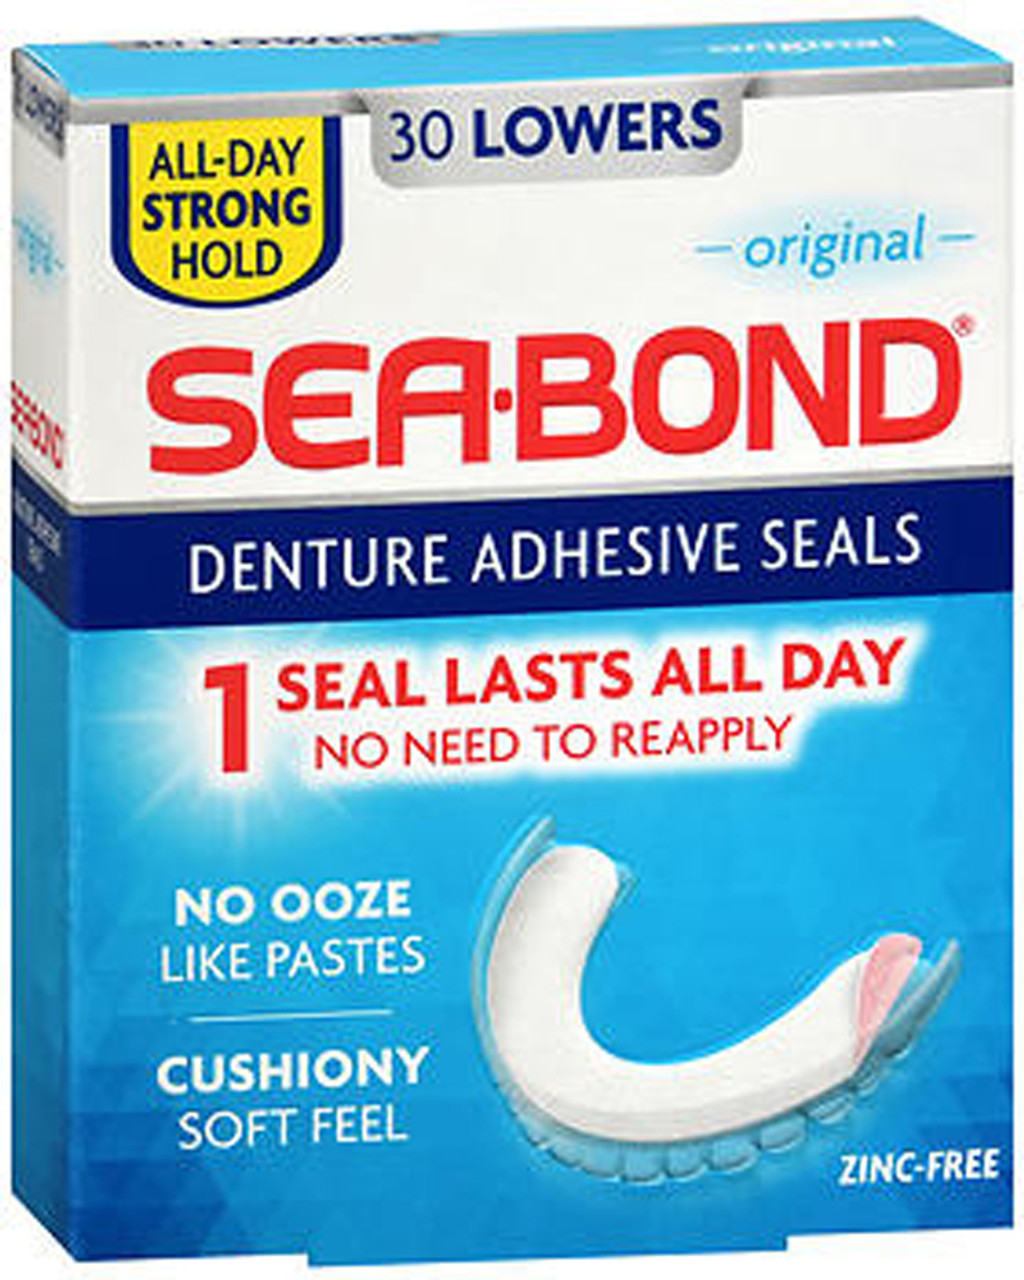 Sea Bond Denture Adhesive Seals TV Spot, 'New Look' 